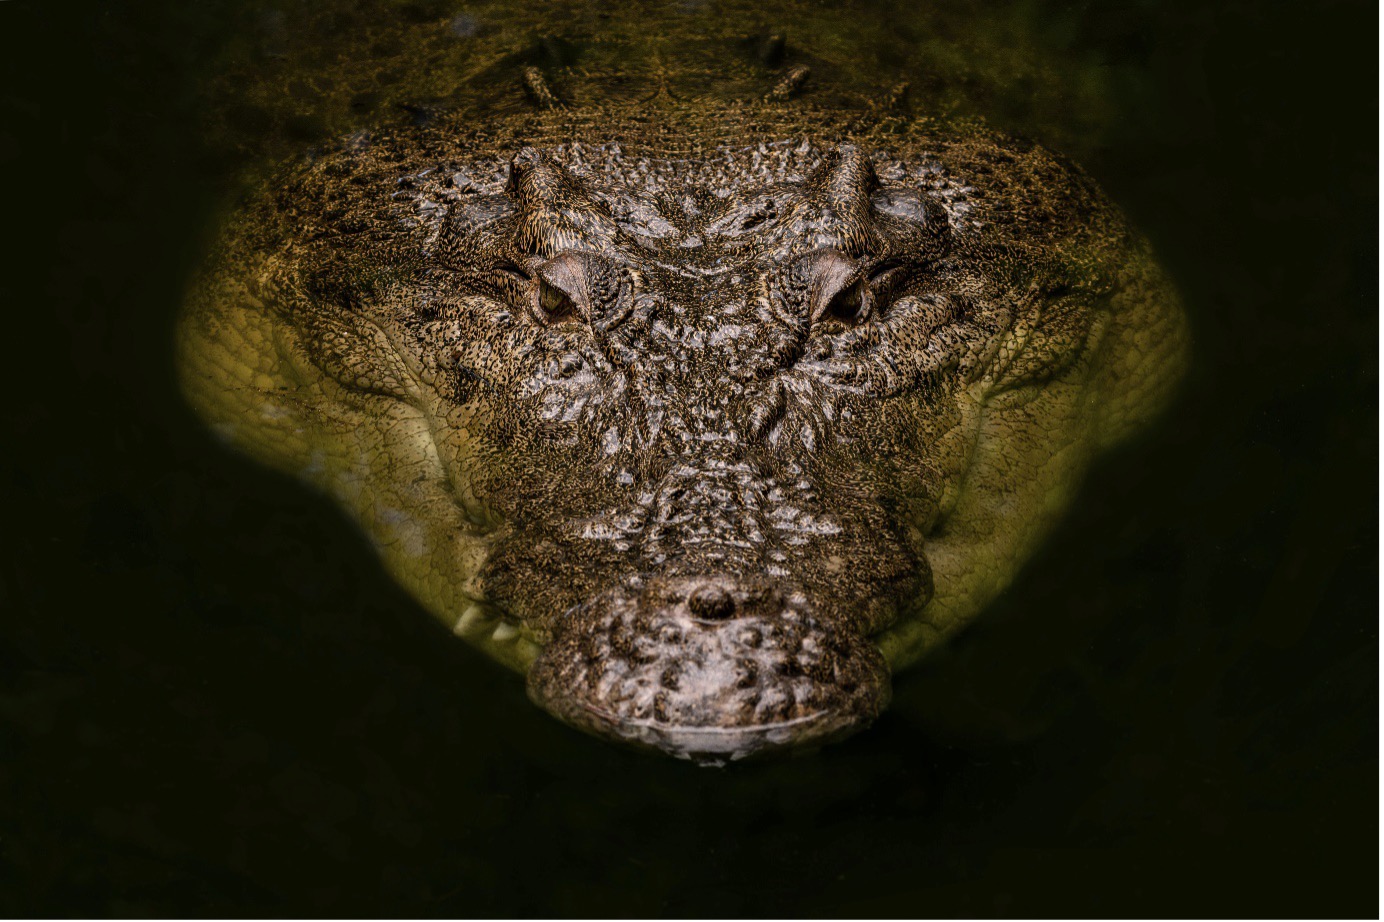 Image of a crocodile